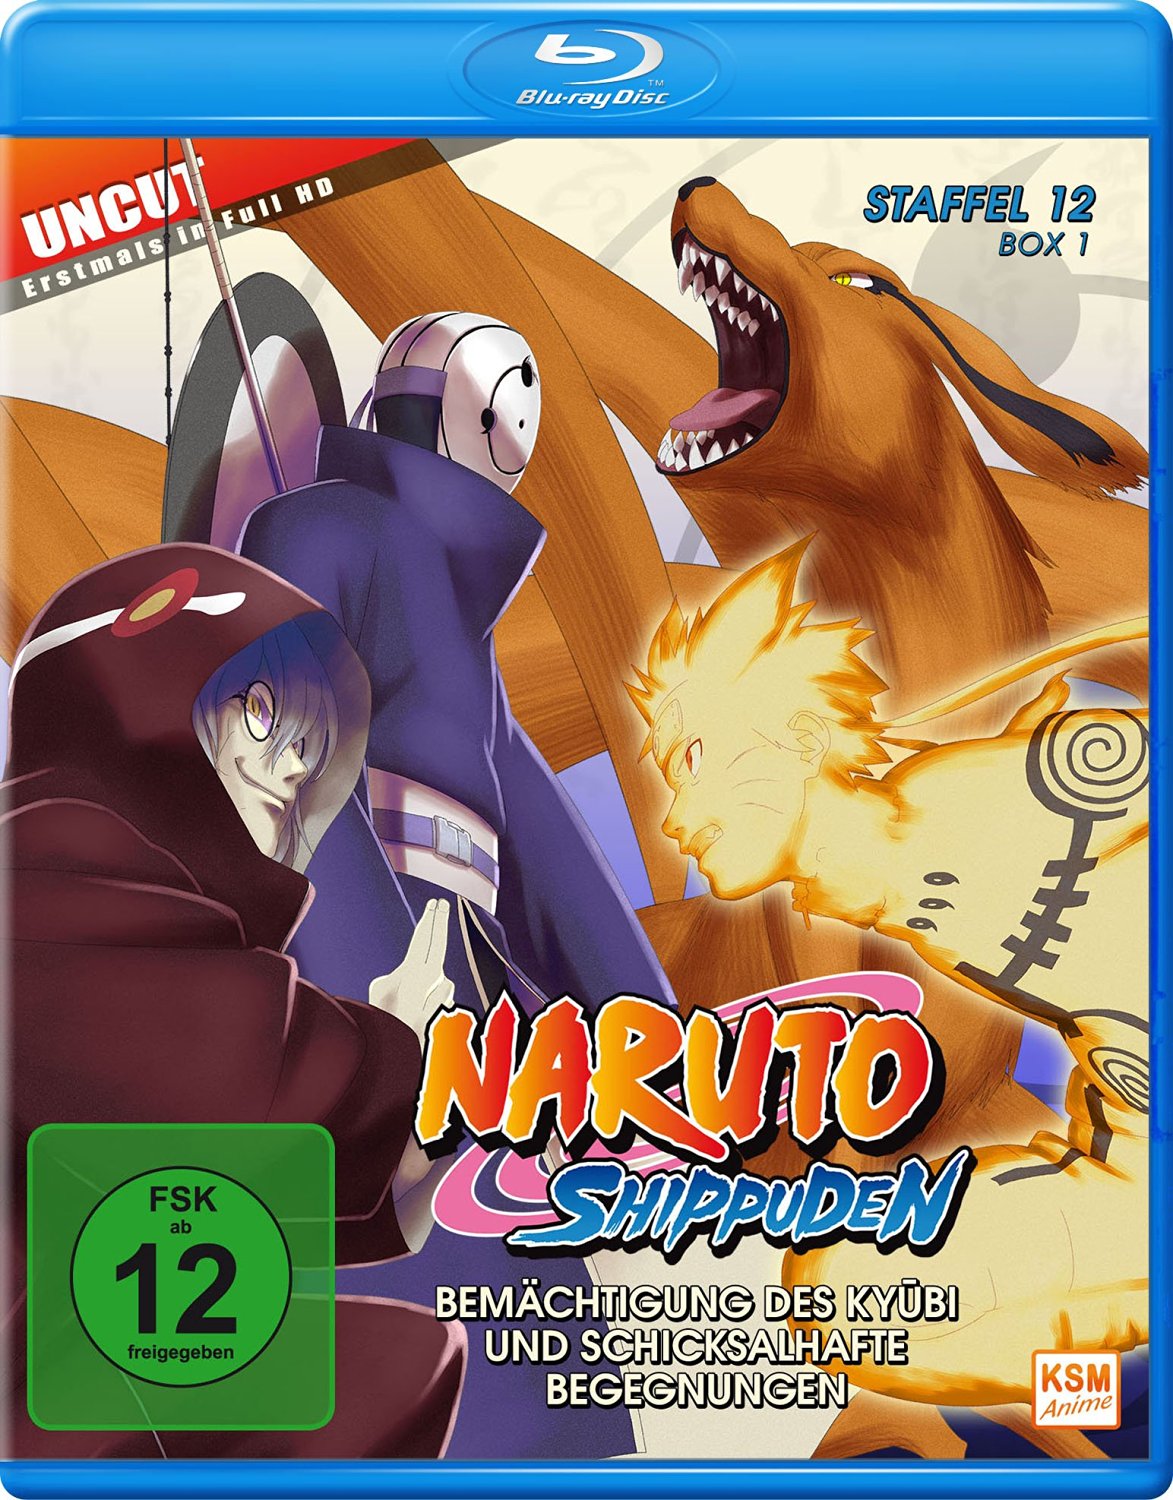 Naruto Shippuden - Staffel 12 Box 1: Episode 463-480 (uncut) Blu-ray Cover